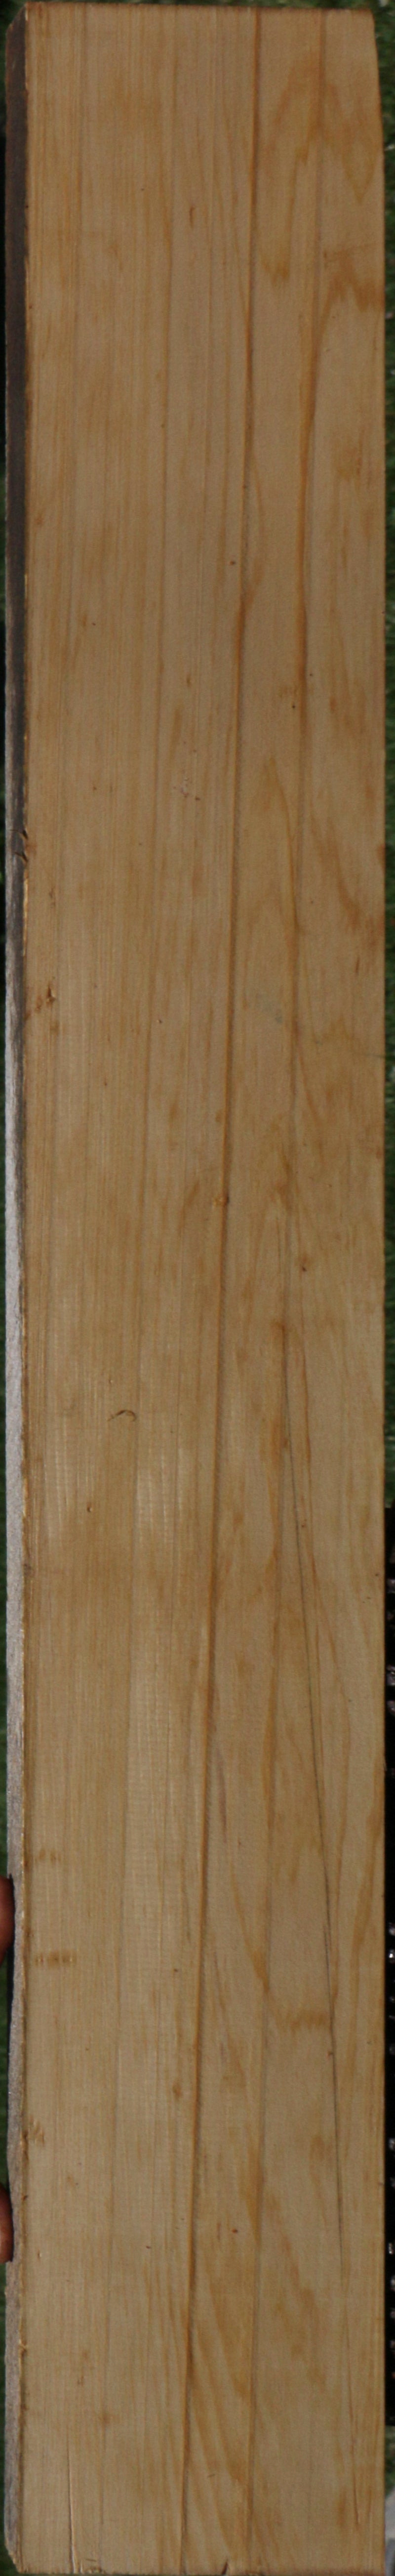 Incense Cedar Lumber